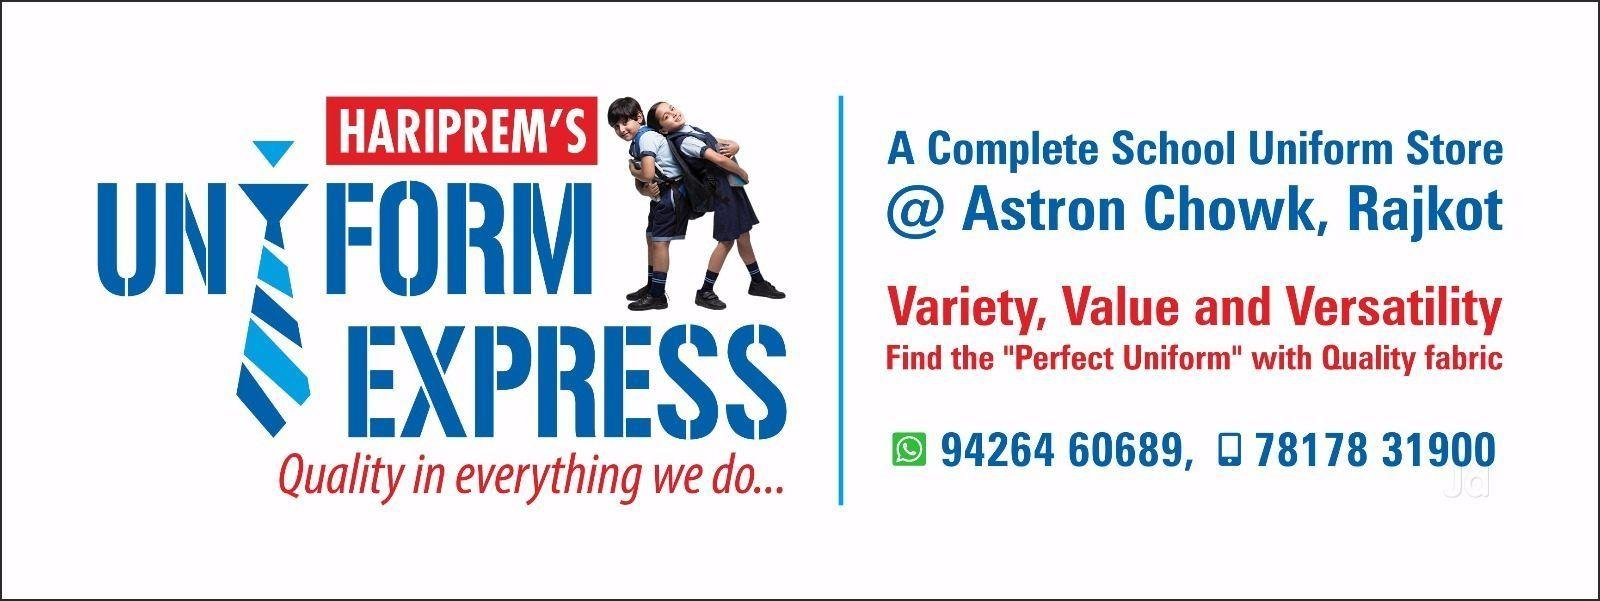 School Uniforms Express Logo - Uniform Express Photos, Astron Chowk, Rajkot- Pictures & Images ...